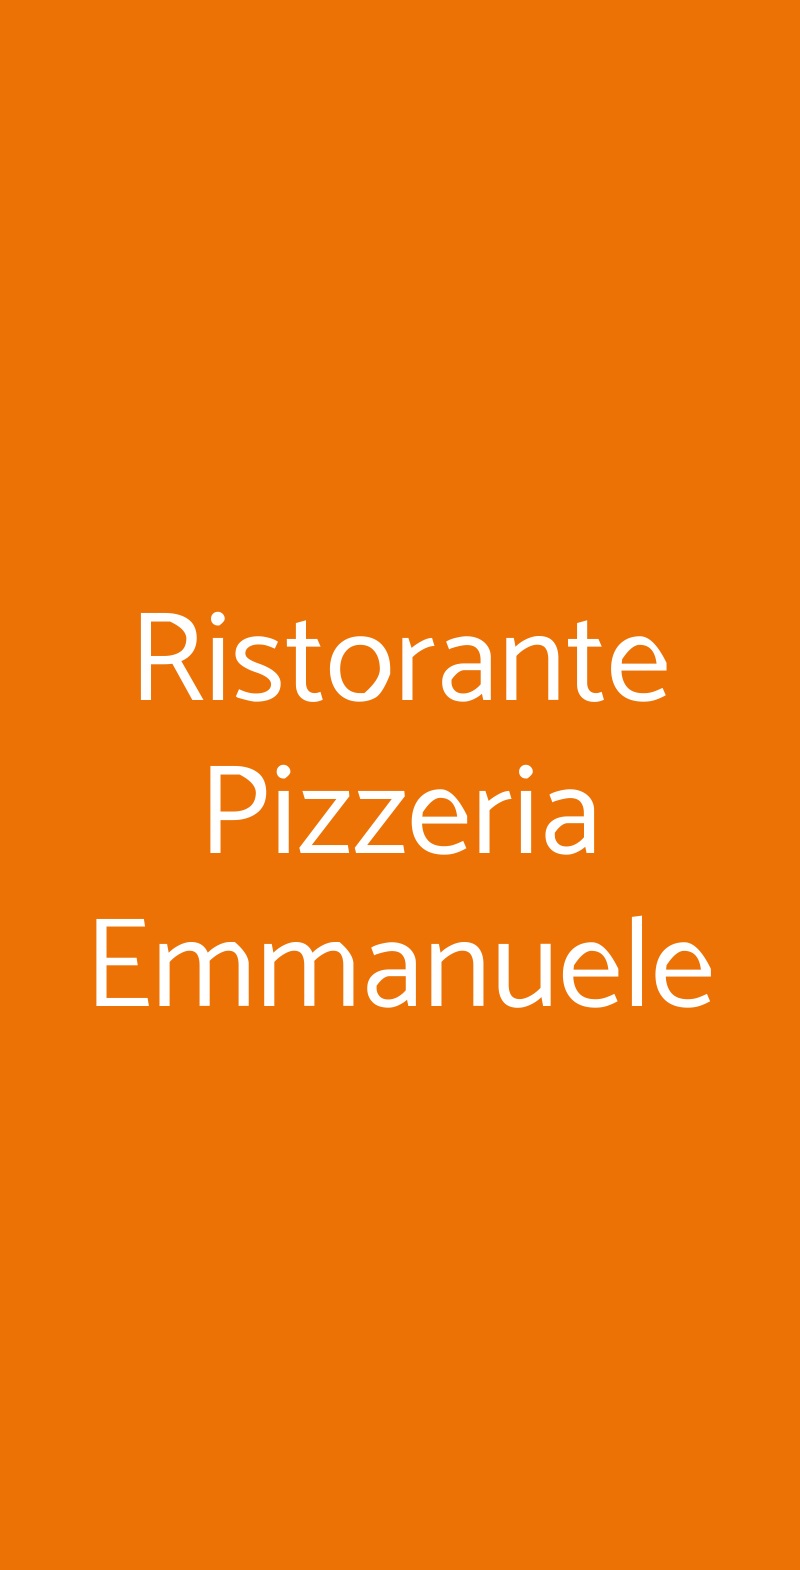 Ristorante Pizzeria Emmanuele Milano menù 1 pagina